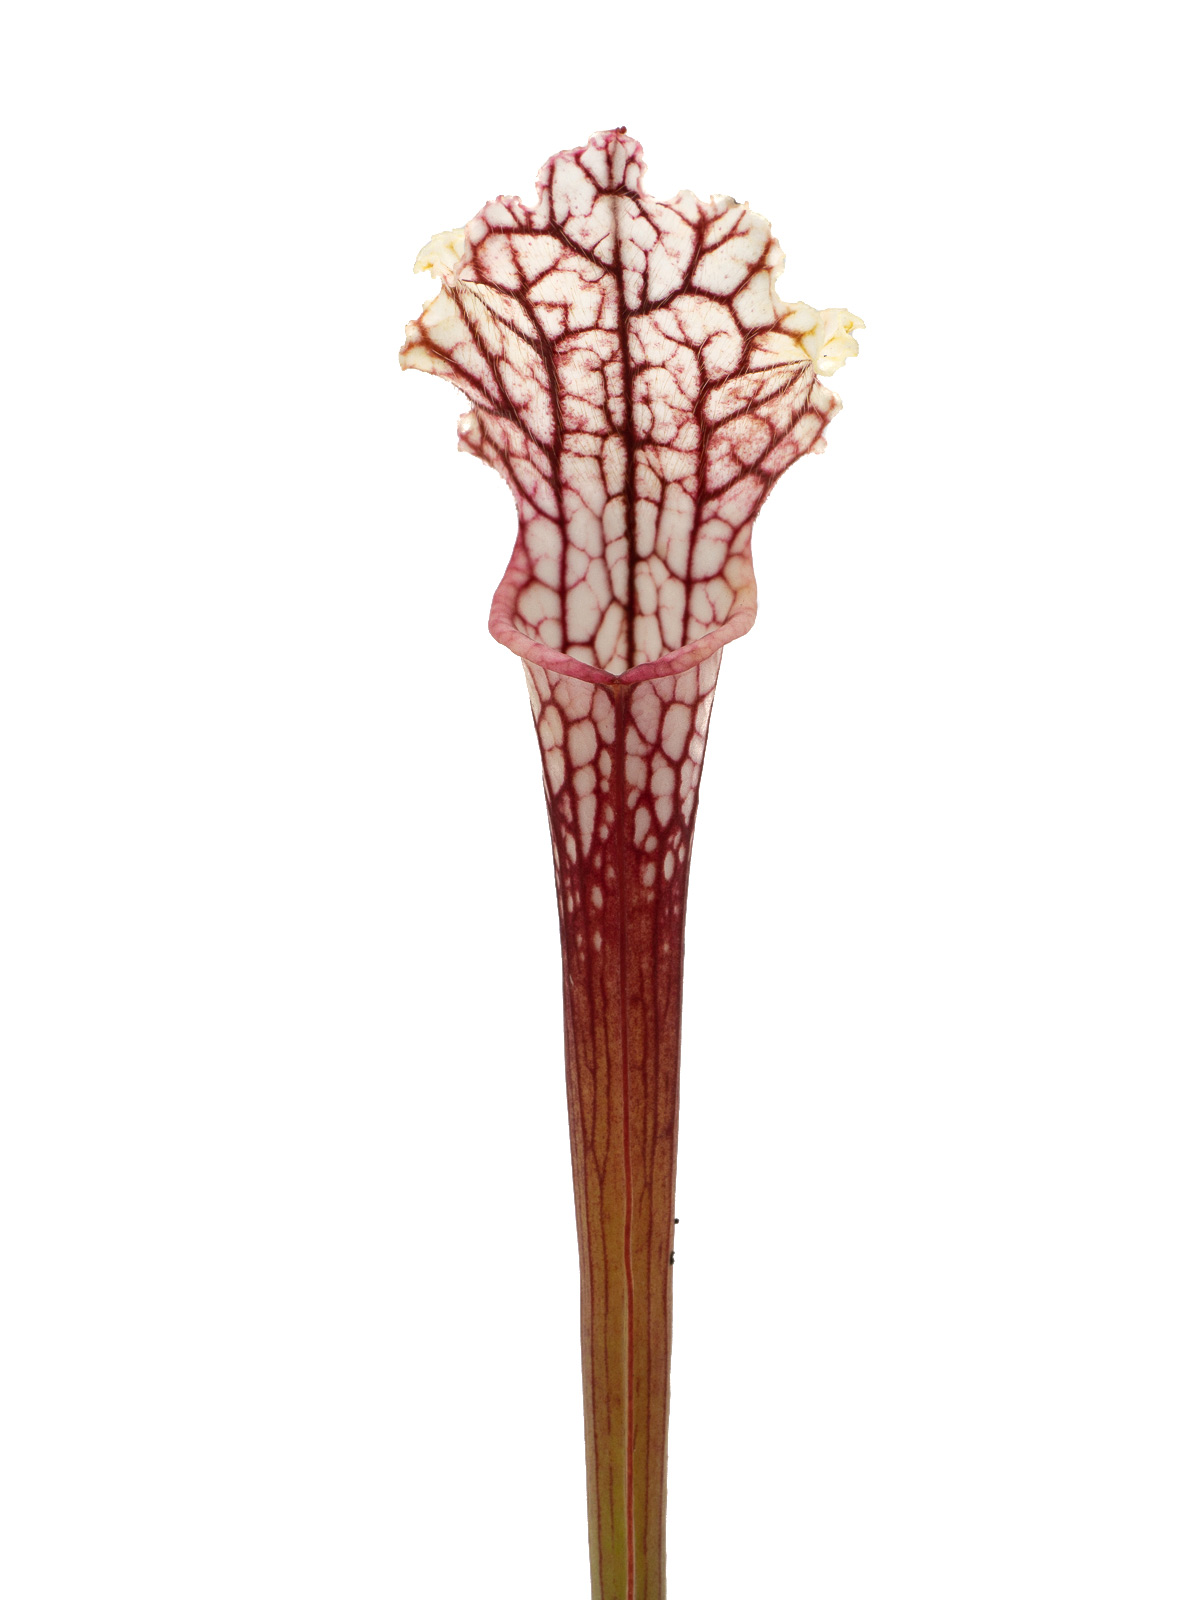 Sarracenia leucophylla - MK L62, CPS seed bank 1993